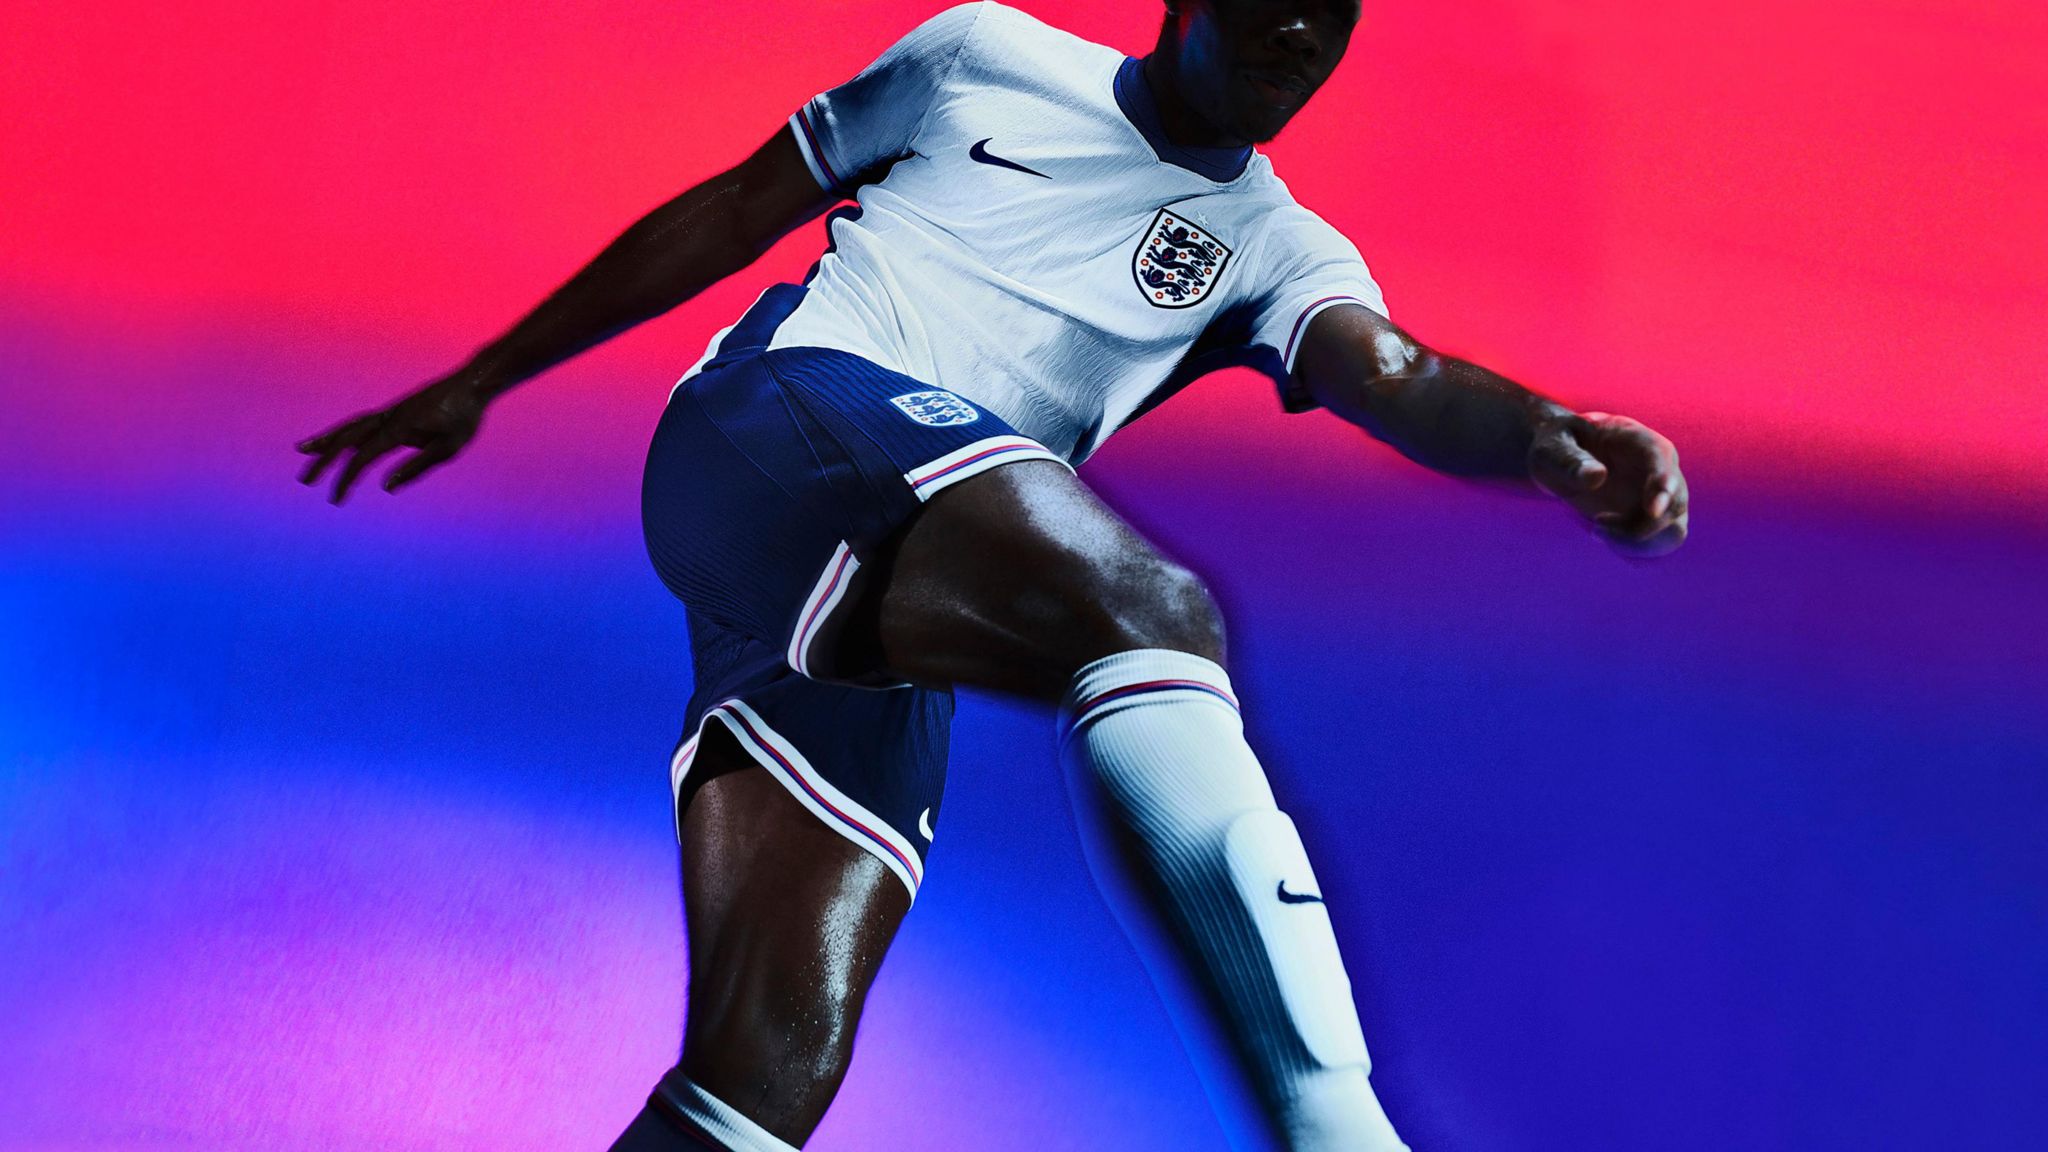 Footballer wears England shirt, shorts and socks